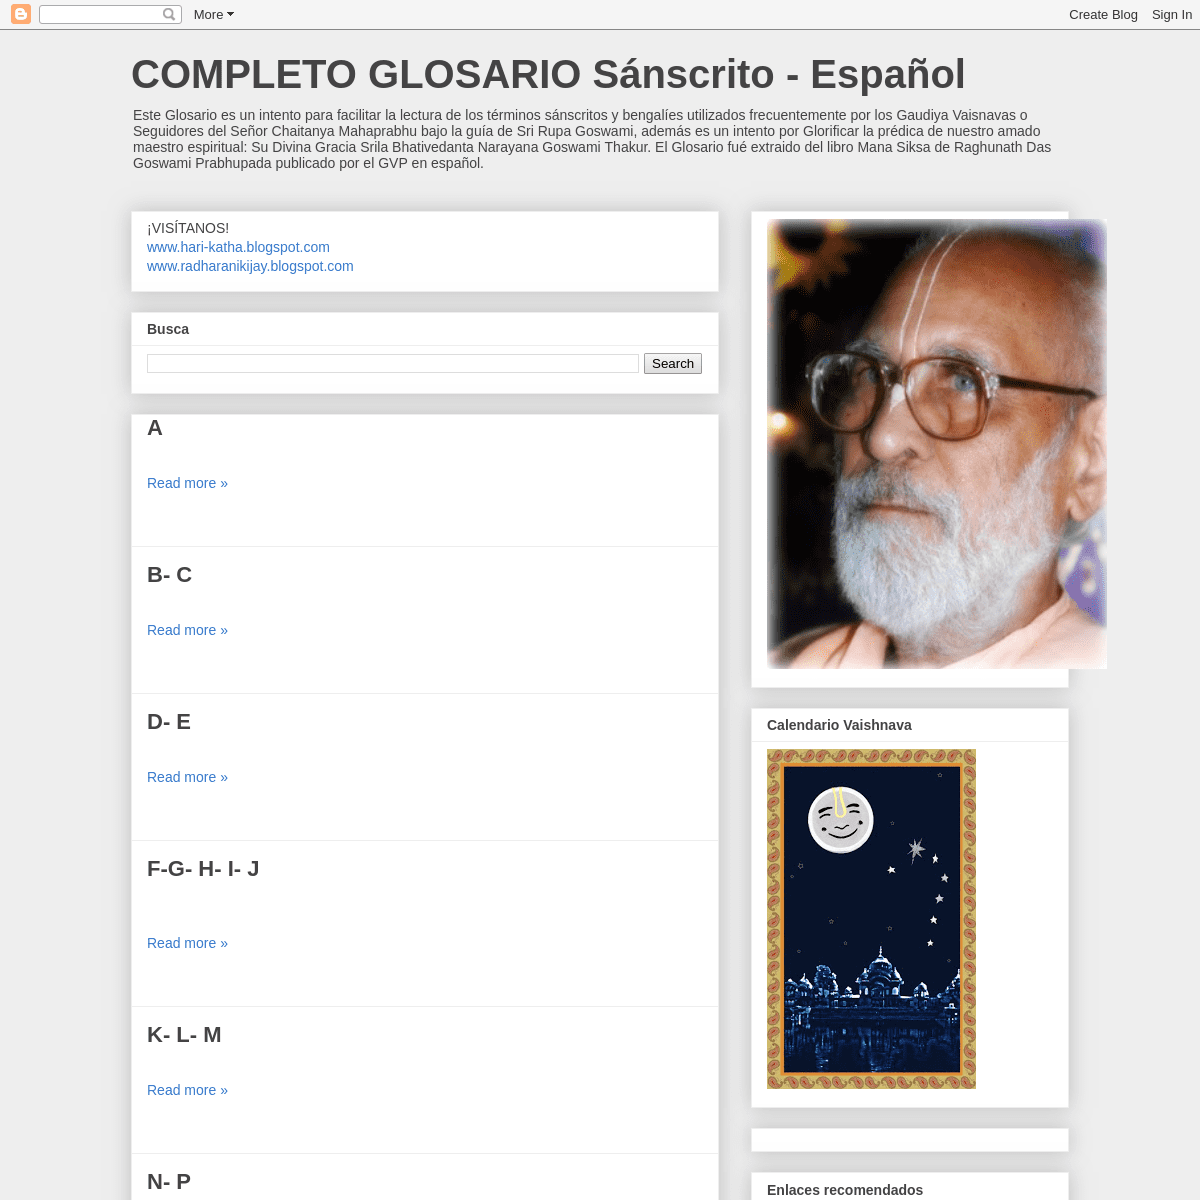 A complete backup of glosariosanscrito.blogspot.com